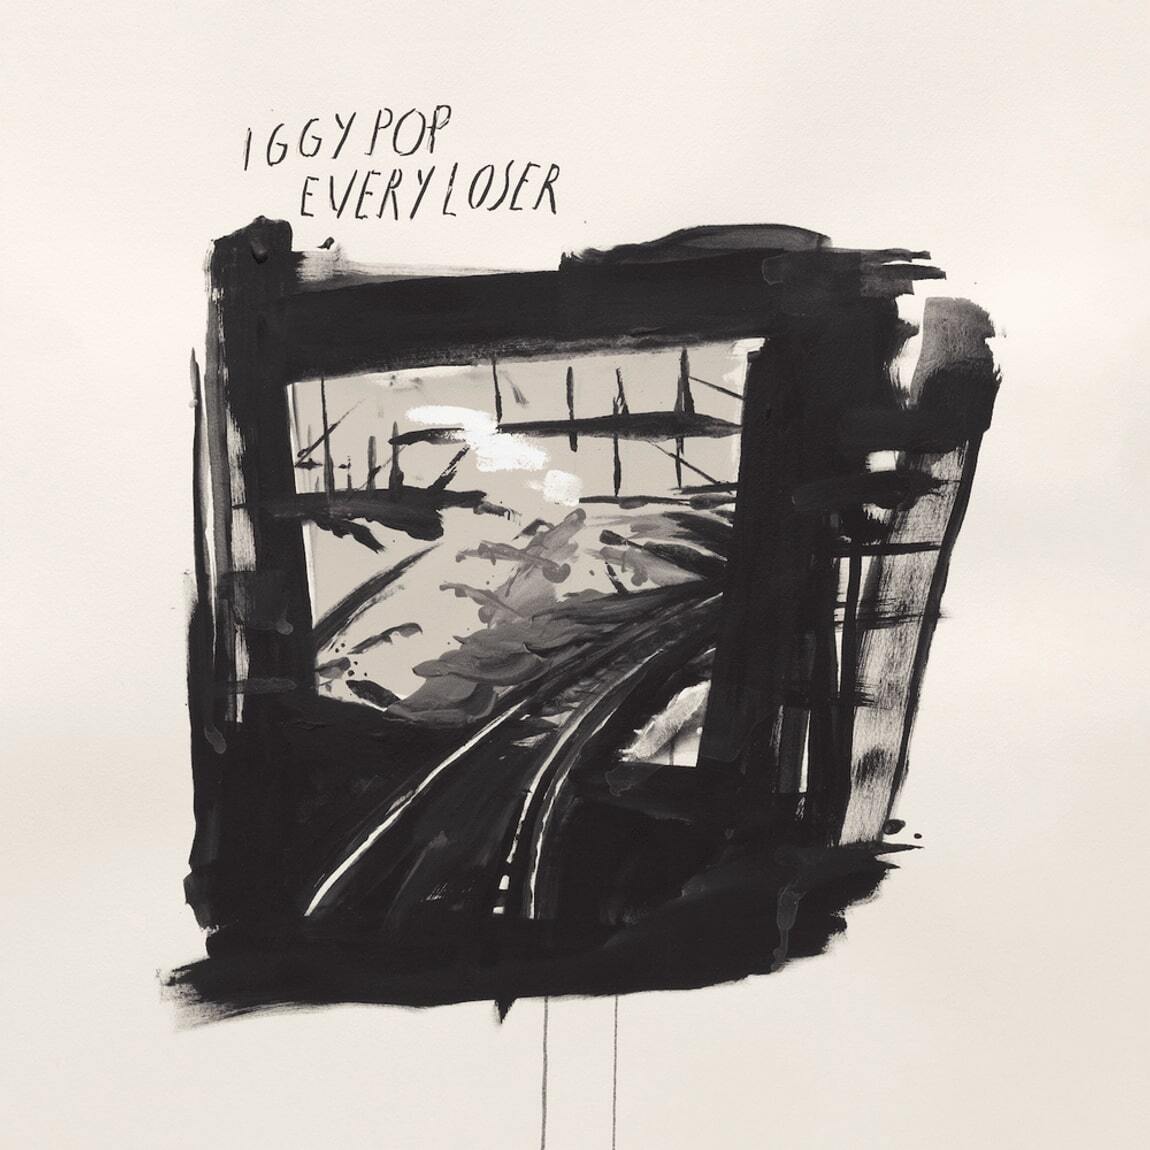 Регги Warner Music Iggy Pop - Every Loser (Coloured Vinyl LP) мифы и легенды древней греции кун н а